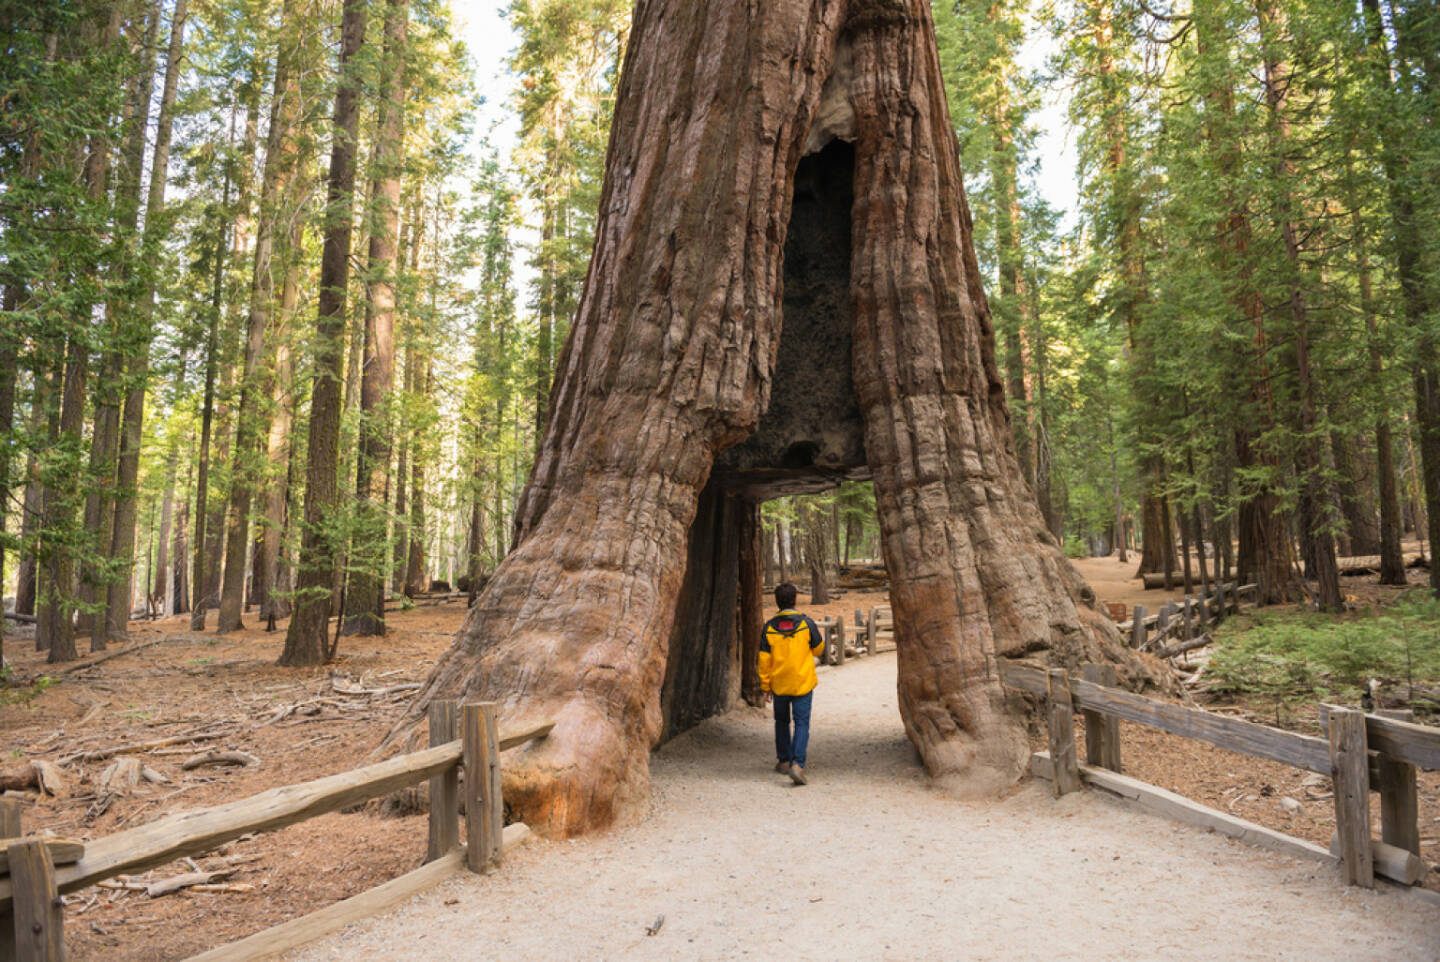 Baum, Baumriese, Riese, groß, gross, Größe, Grösse, http://www.shutterstock.com/de/pic-239236648/stock-photo-giant-sequoia-mariposa-grove-yosemite-national-park-california.html